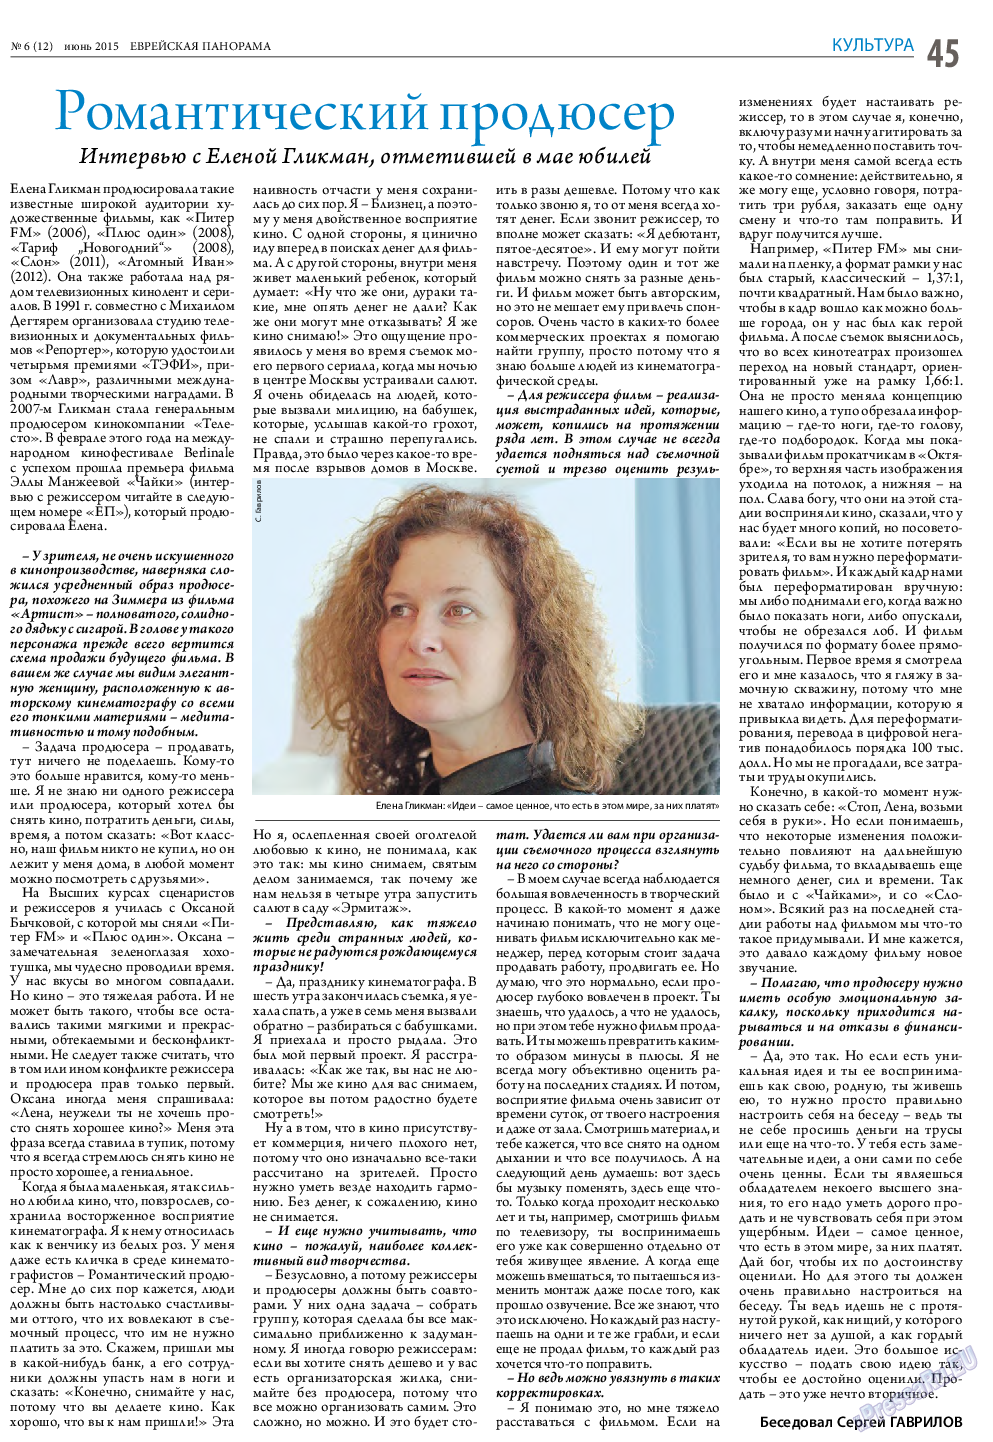 Еврейская панорама, газета. 2015 №6 стр.45